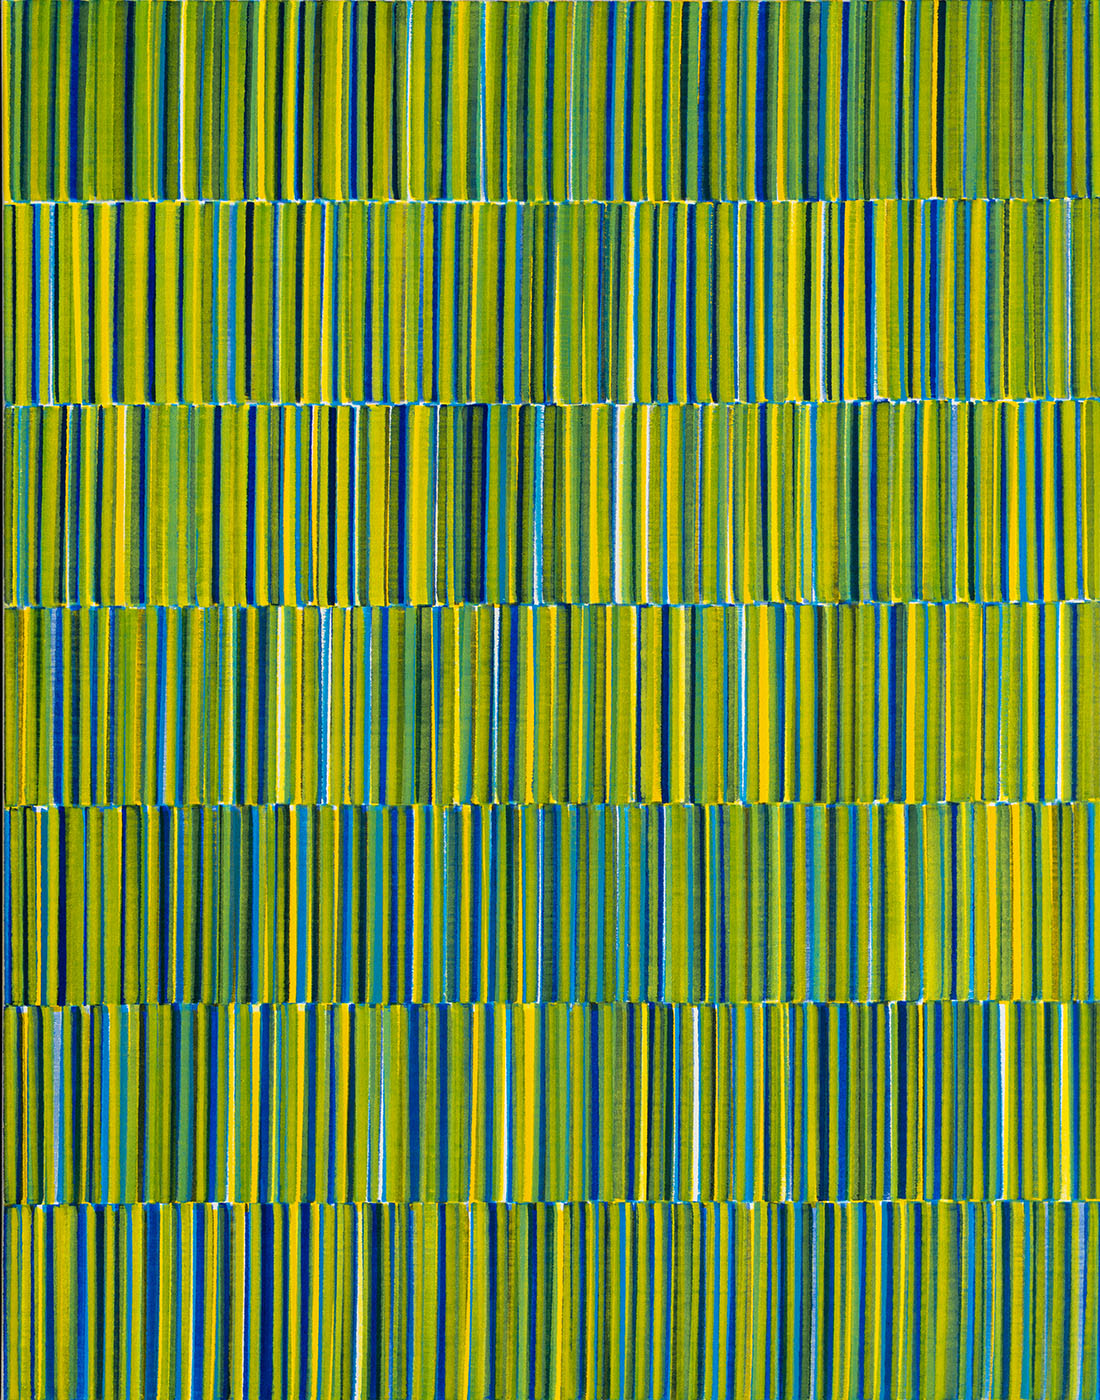 Nikola Dimitrov, FarbKlang VIII, 2019, Pigmente, Bindemittel auf Leinwand, 140 × 110 cm